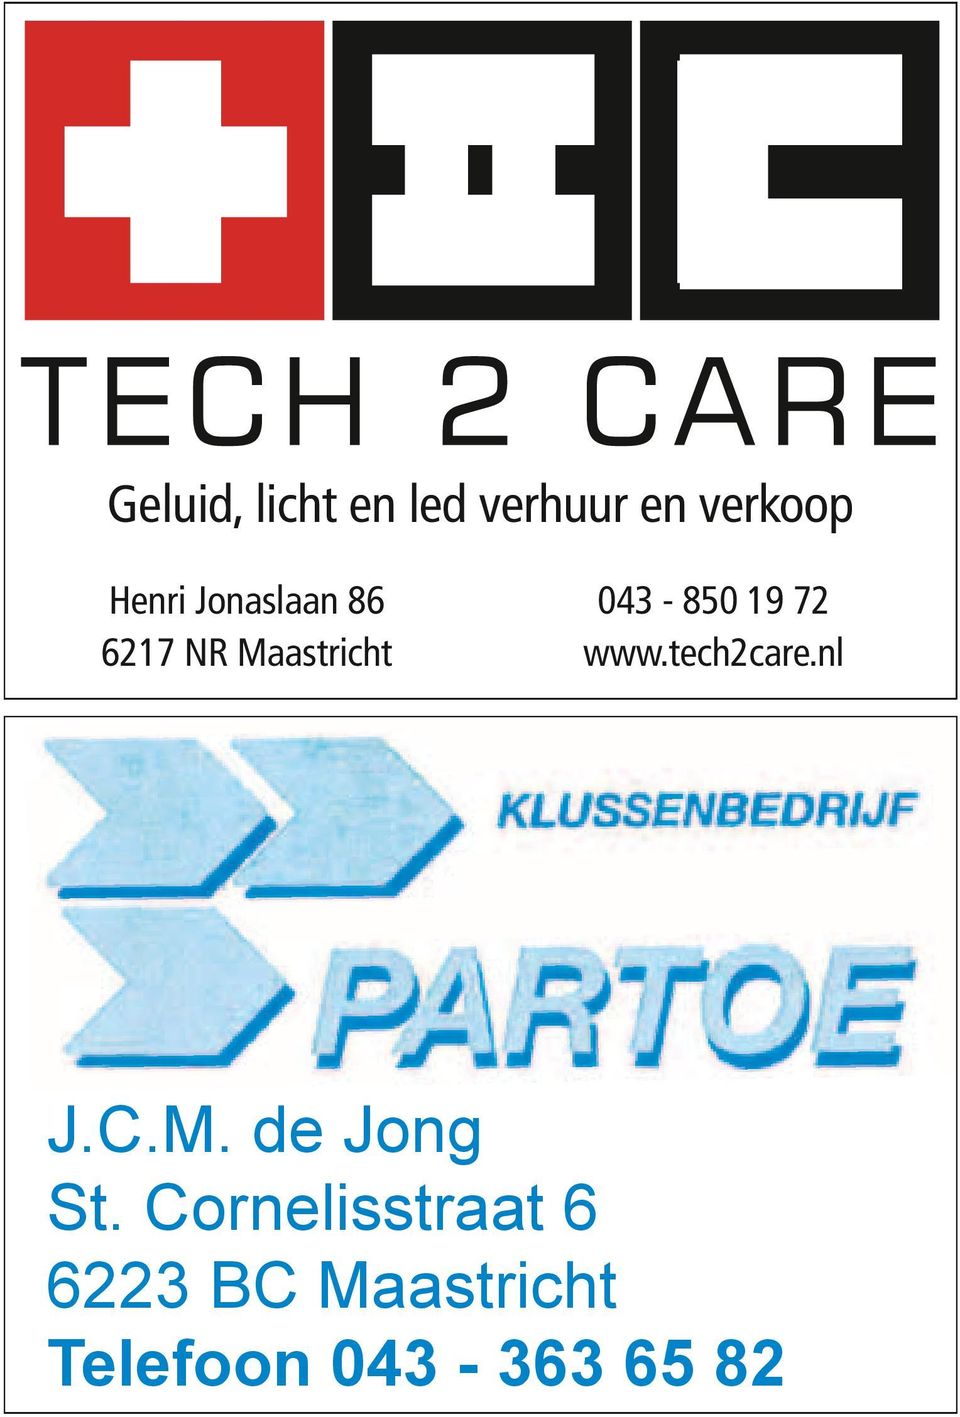 tech2care.nl 0094527.pdf 1 3-12-2012 10:22:37 J.C.M.